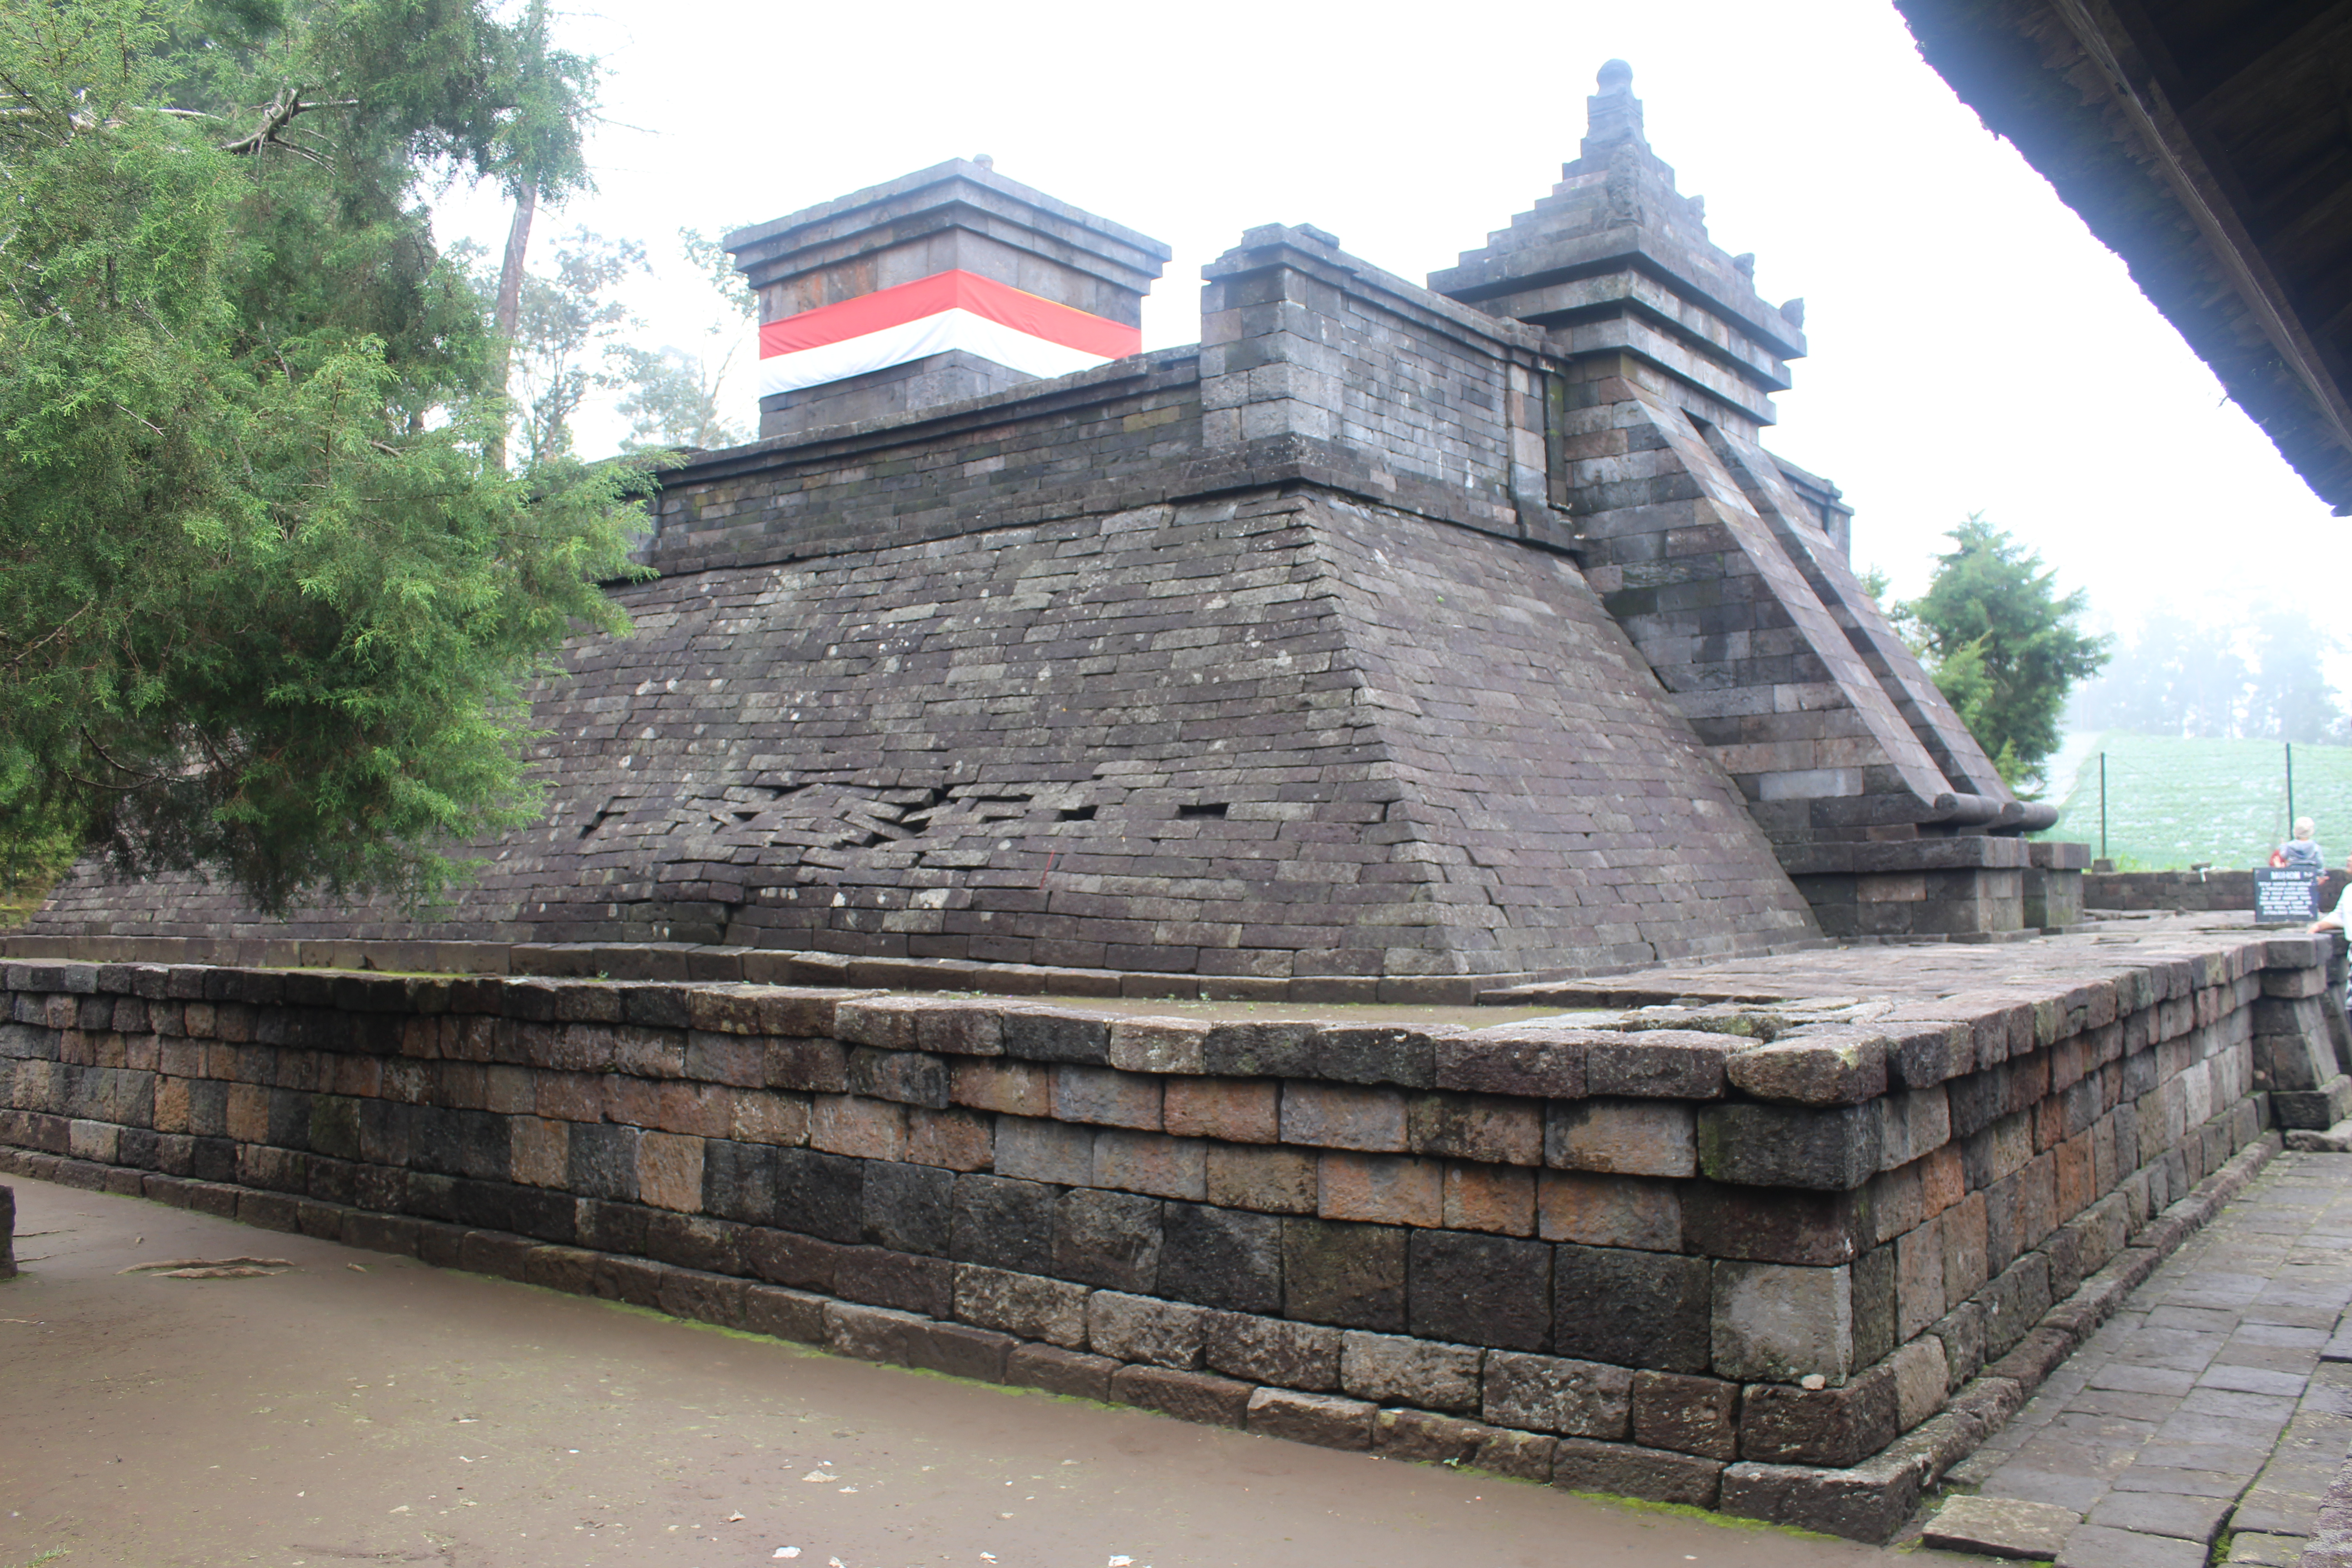 Pyramidal temple seen obliquely